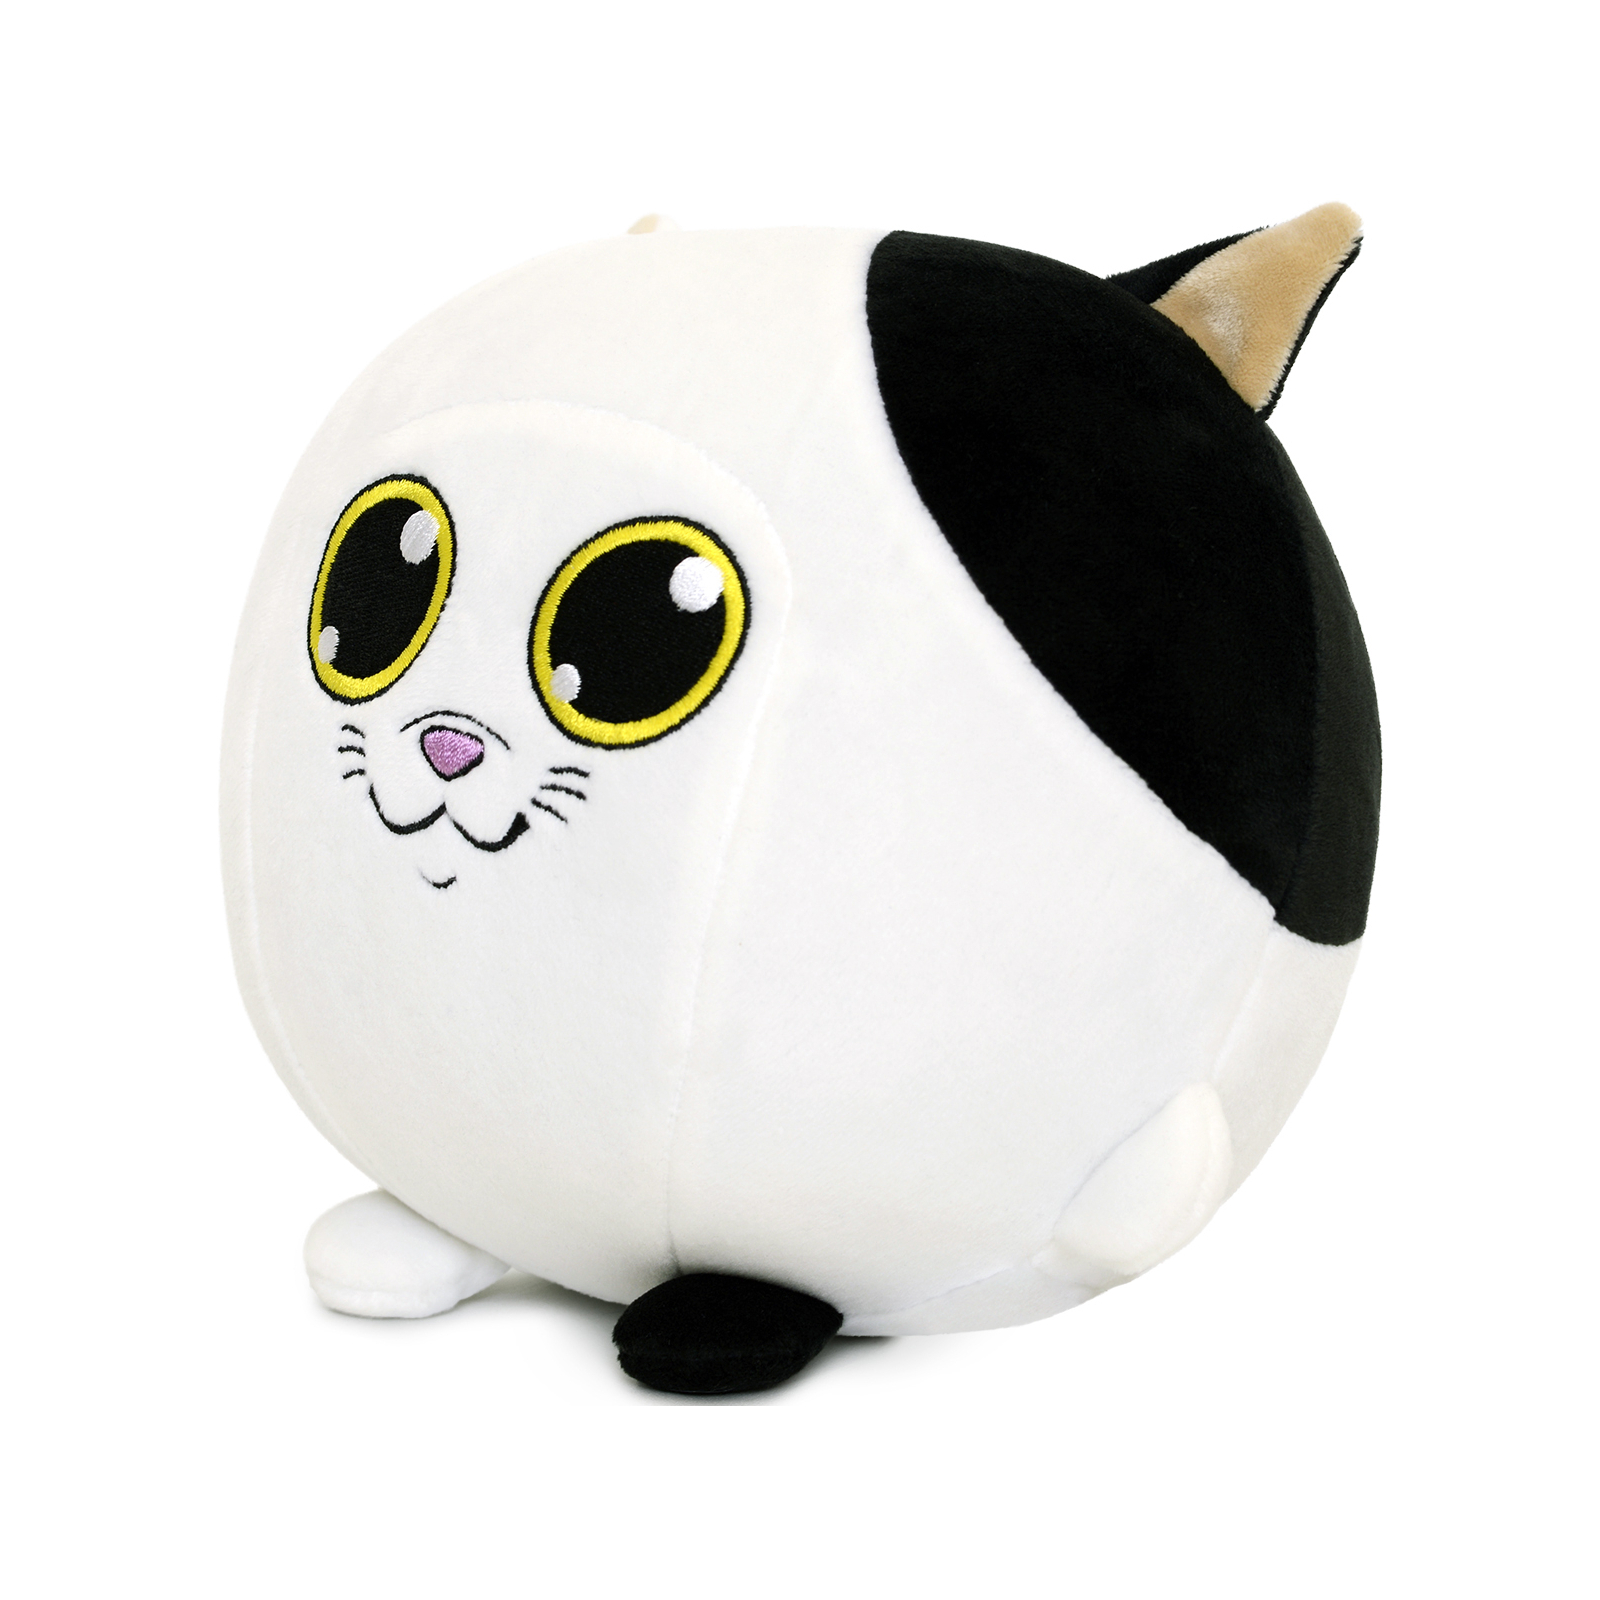 Мягкая игрушка WP Merchandise котик Пури (FWPKITTYPUR22WT00) изображение 2